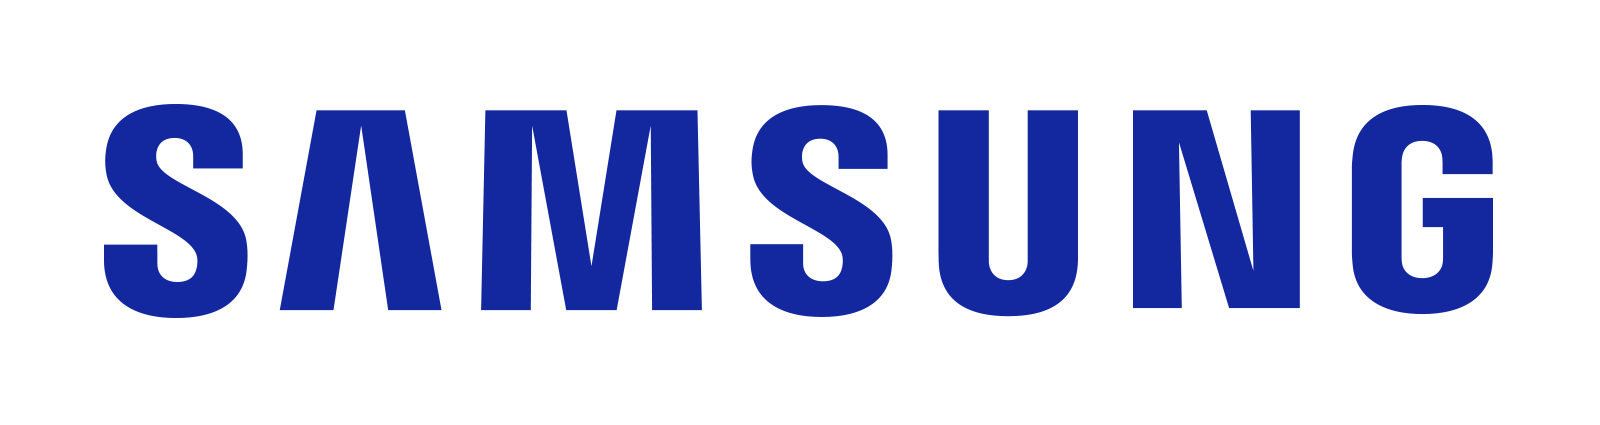 Samsung Electronics Co.Ltd.